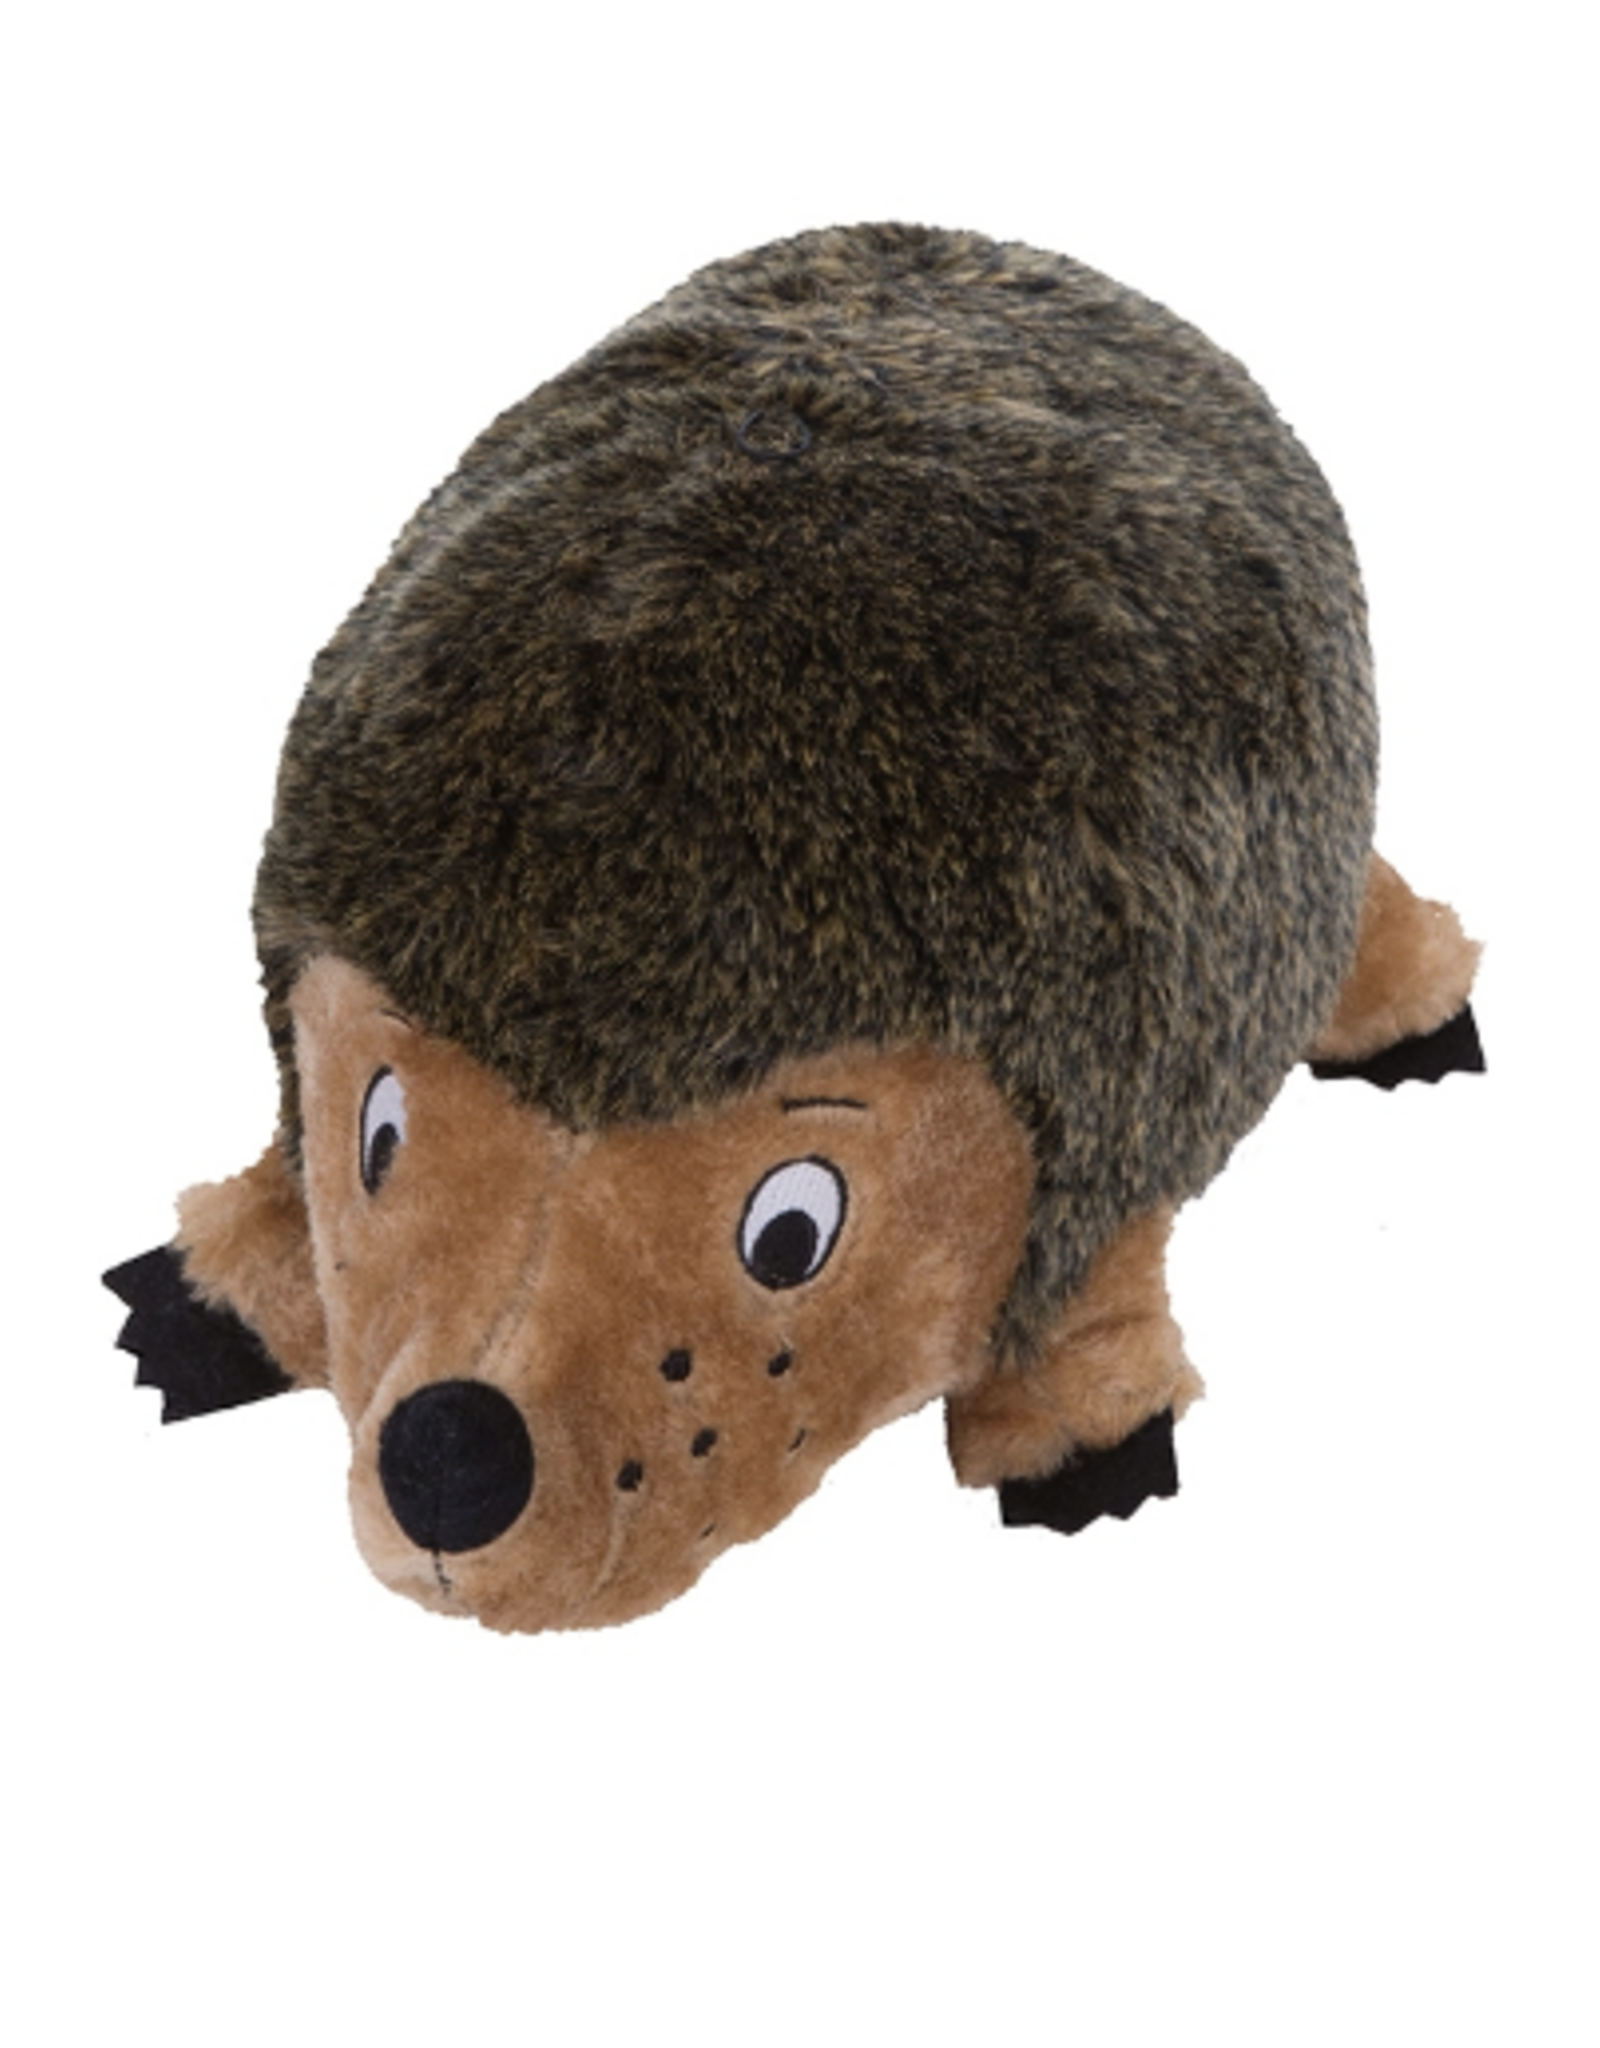 https://cdn.shoplightspeed.com/shops/632188/files/18674431/1600x2048x1/outwardhound-outward-hound-medium-hedgehog-dog-toy.jpg